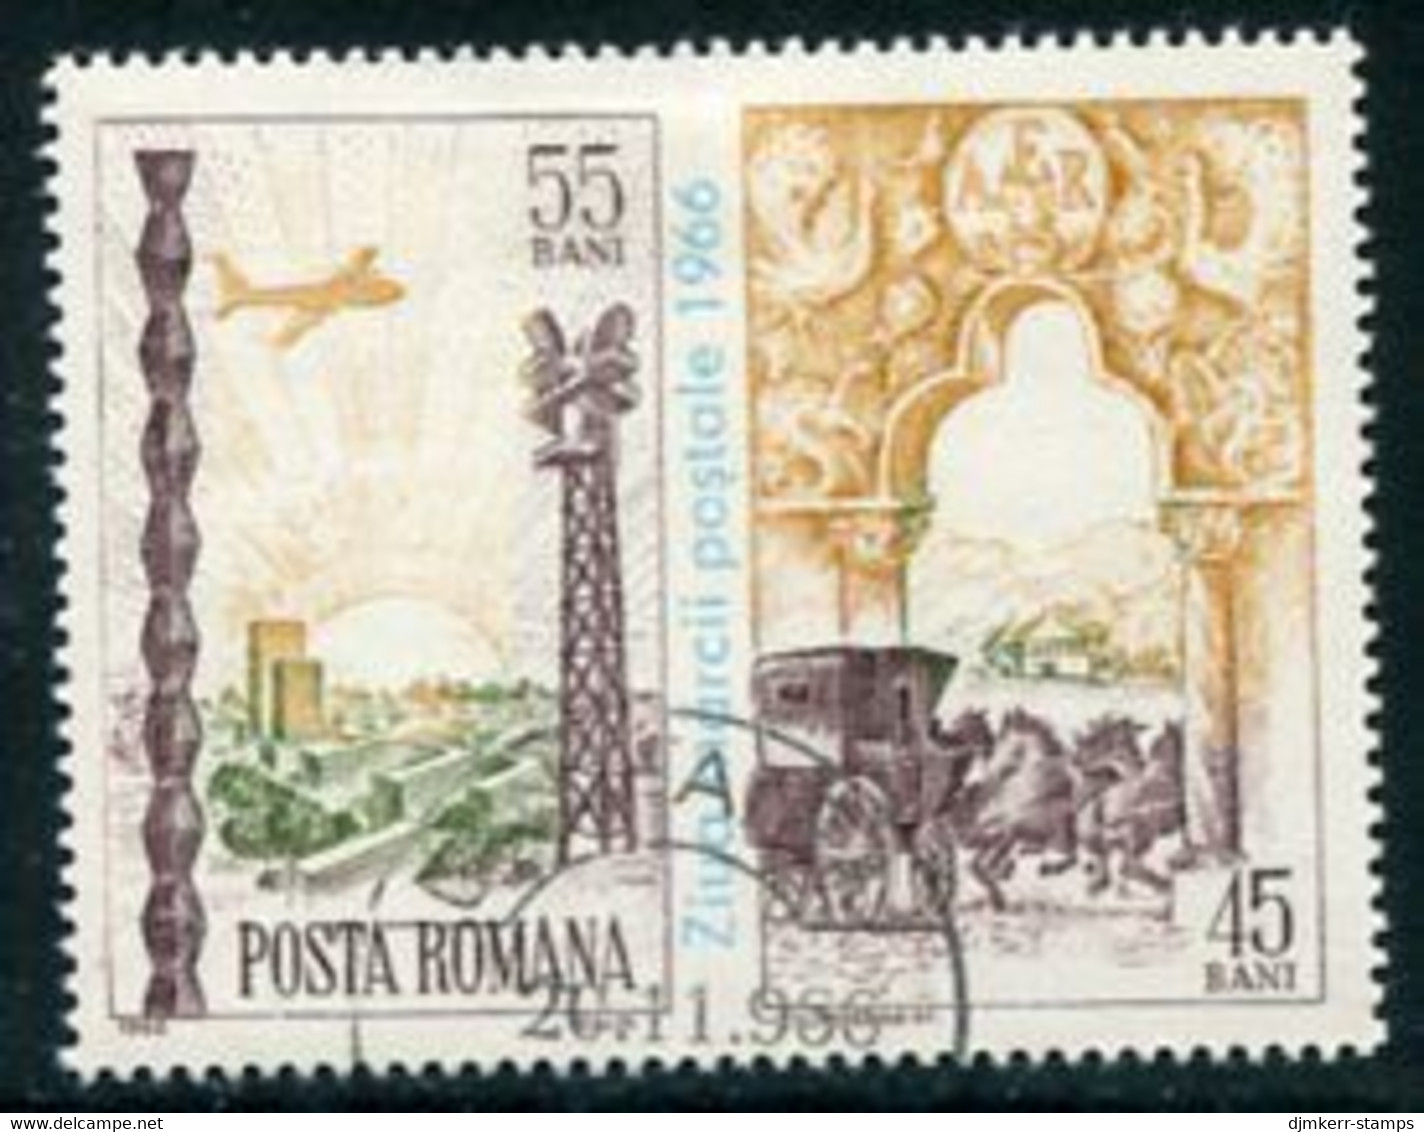 ROMANIA 1966 Stamp Day Used.  Michel 2552 - Gebraucht